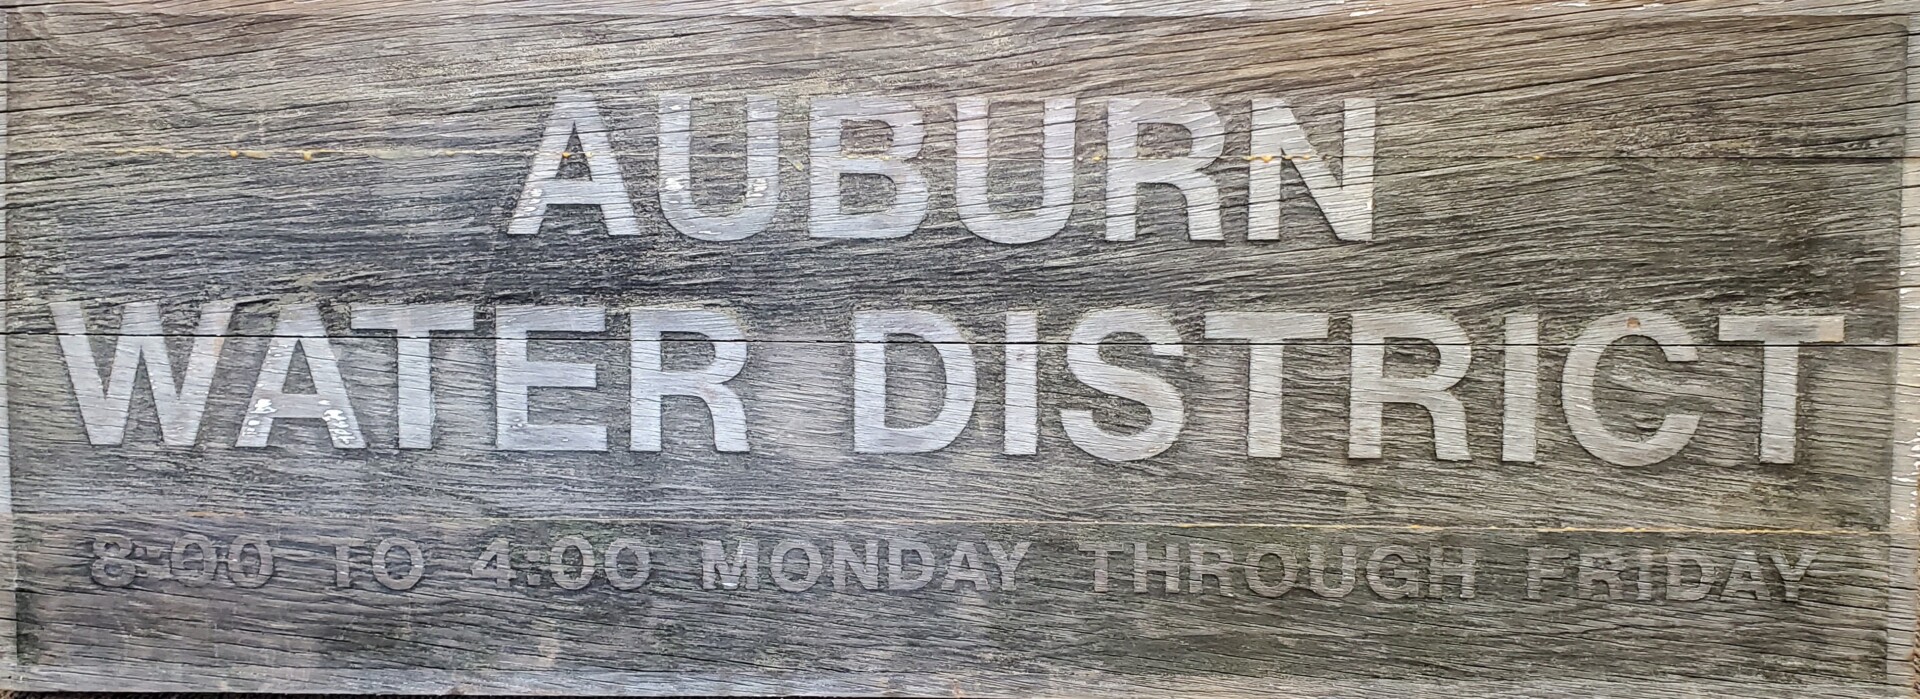 Auburn Water District Sign